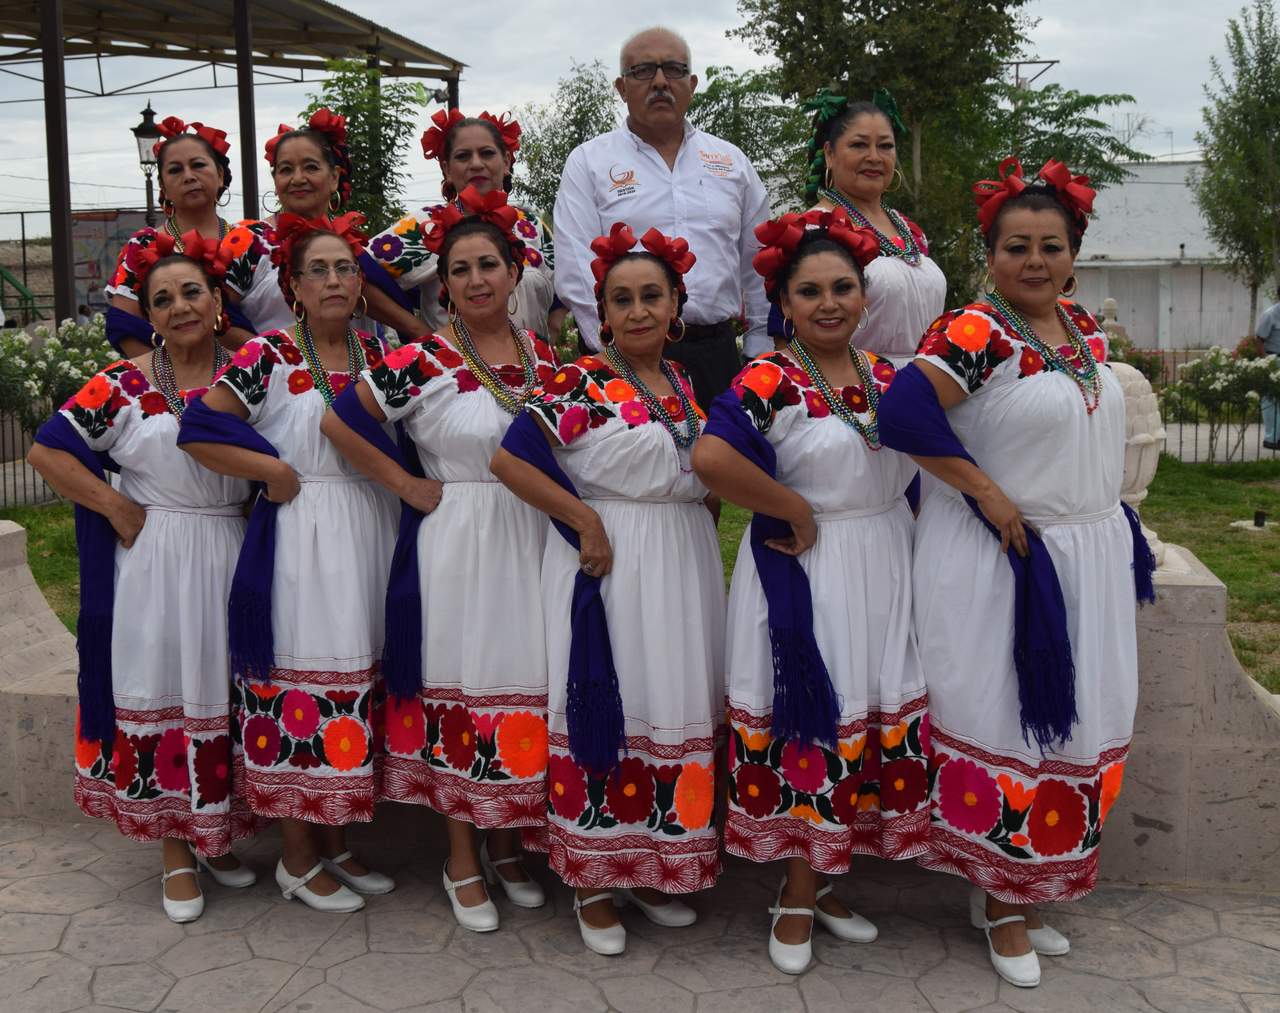 Grupo de danza regional de los jubilados de la Delegación
D-IV-5, a cargo de Macrino Jáquez Villarreal, de Francisco
I. Madero, Coahuila.